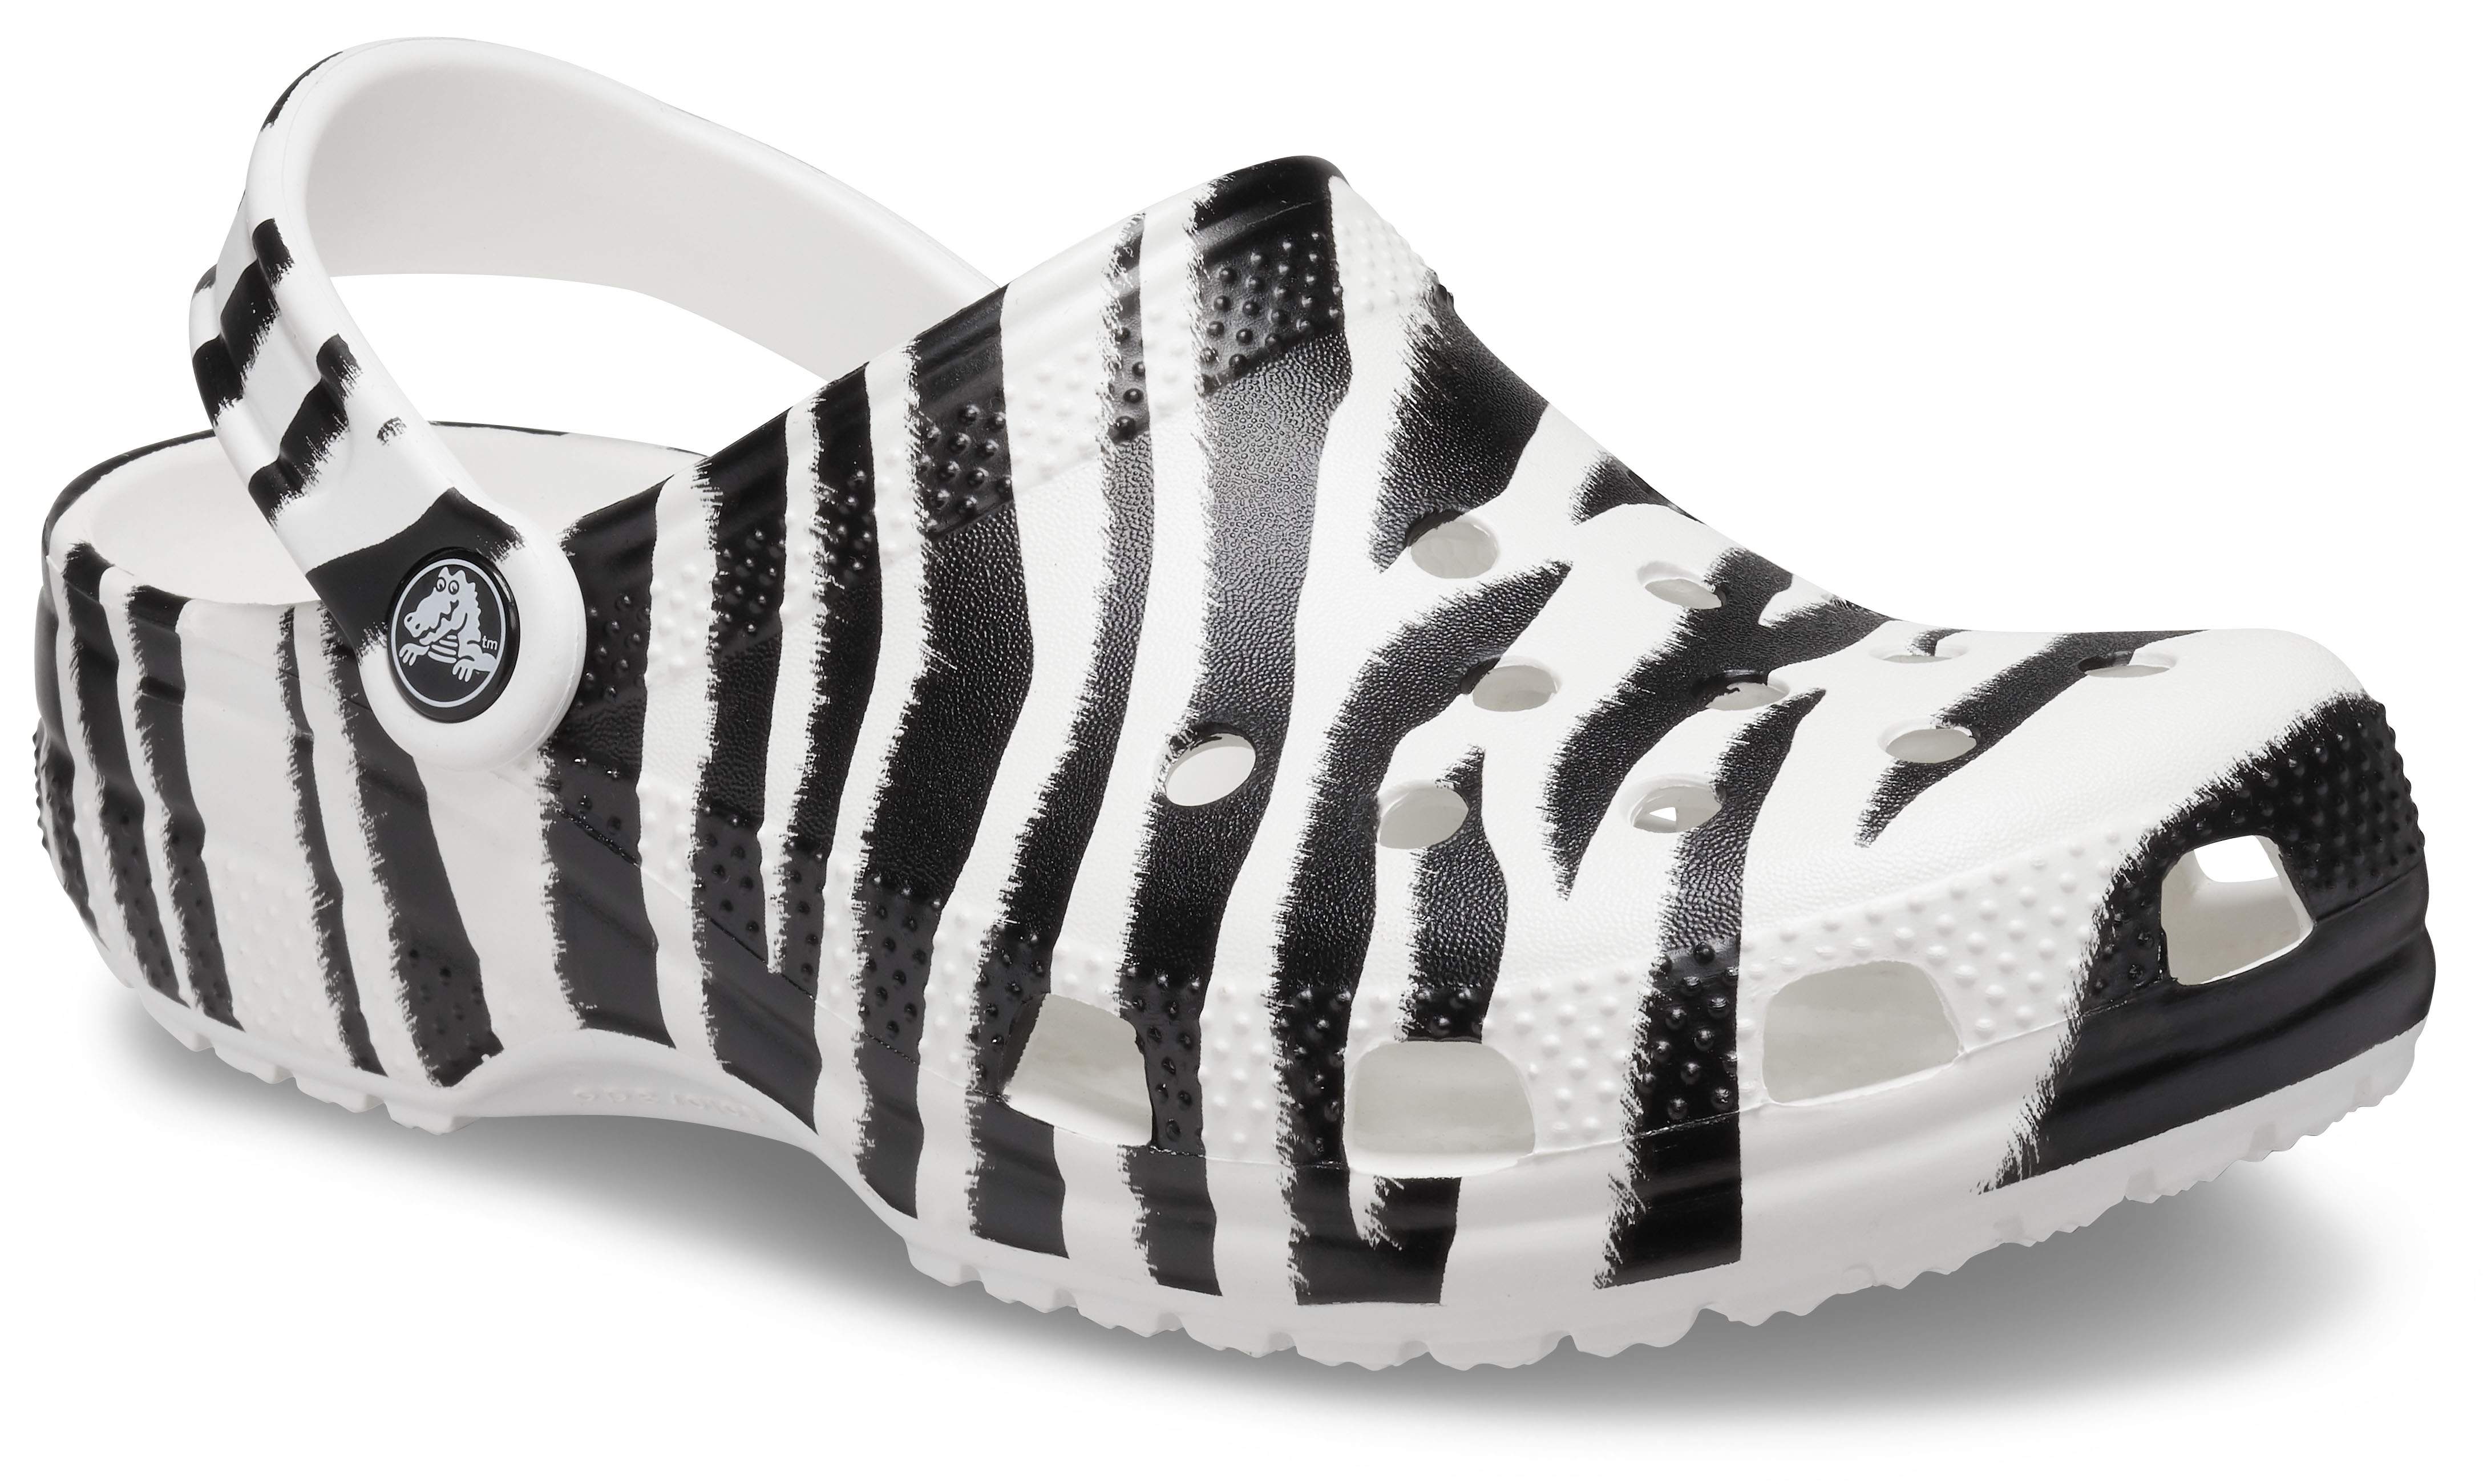 Mixte Crocs Mens Womens Classic Animal Clog|Zebra and Leopard Print Shoes